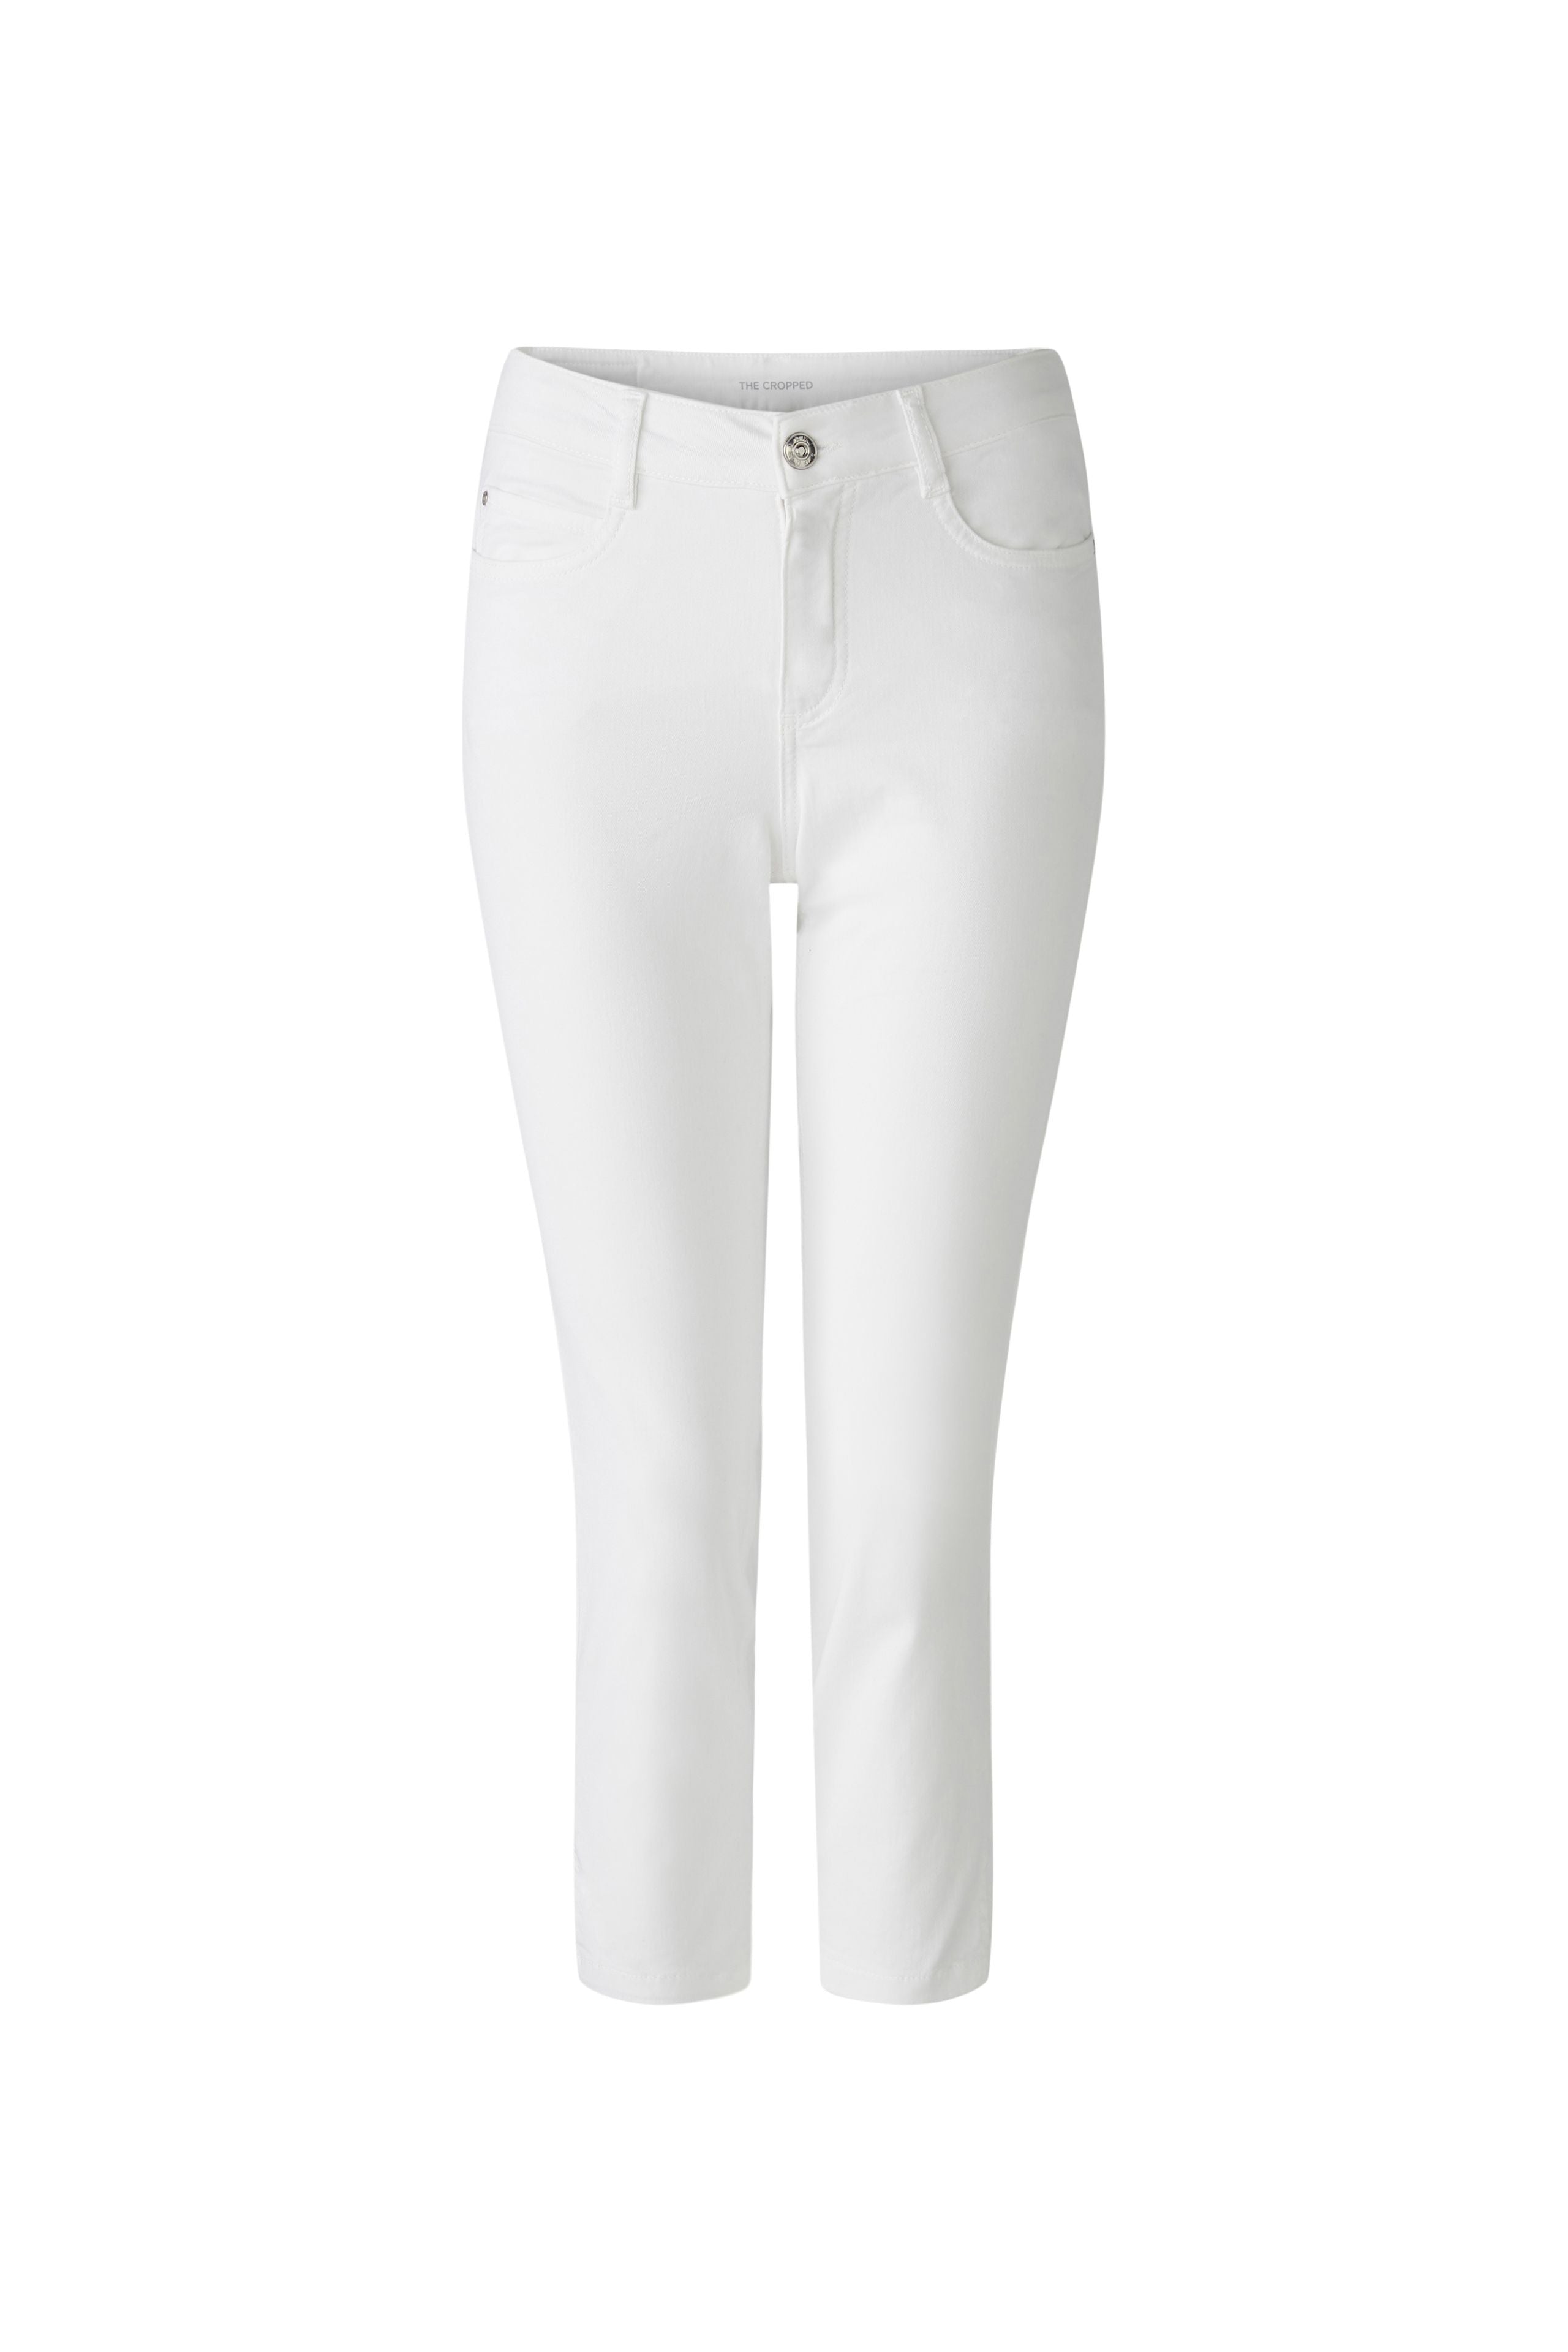 Capri Trouser in Optic White